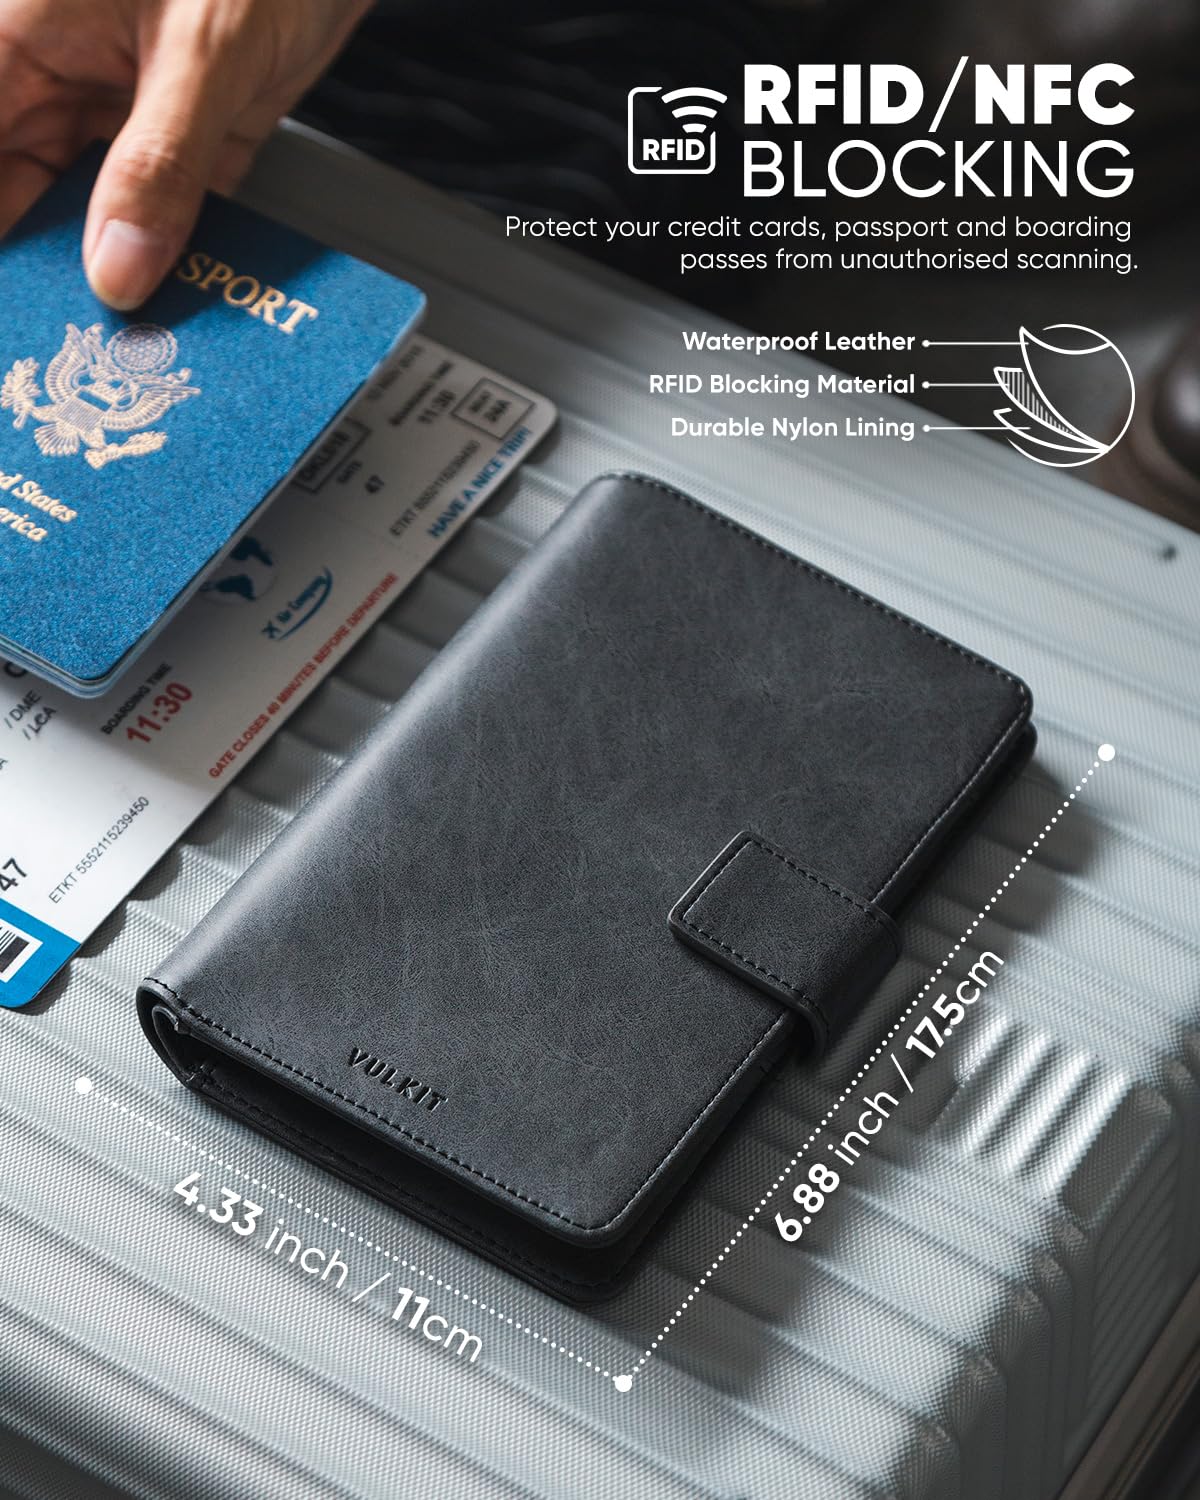 VULKIT Passport Wallet Compatible with Airtag Holder Bifold Travel Card Holder, Black